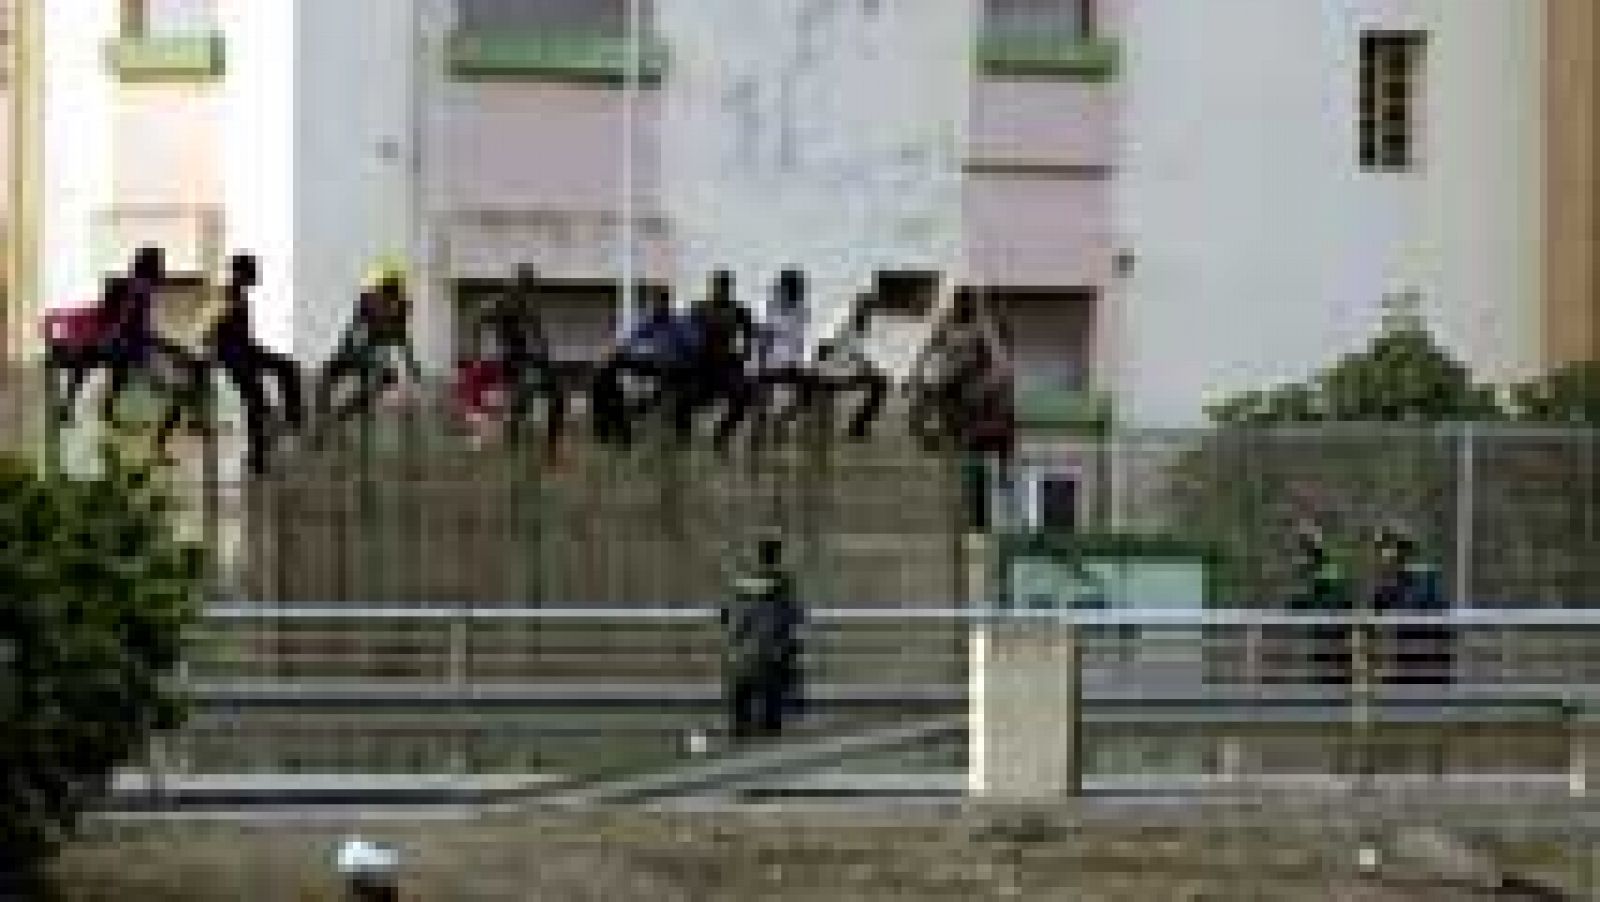 Nuevo intento de salto masivo a la valla de Melilla